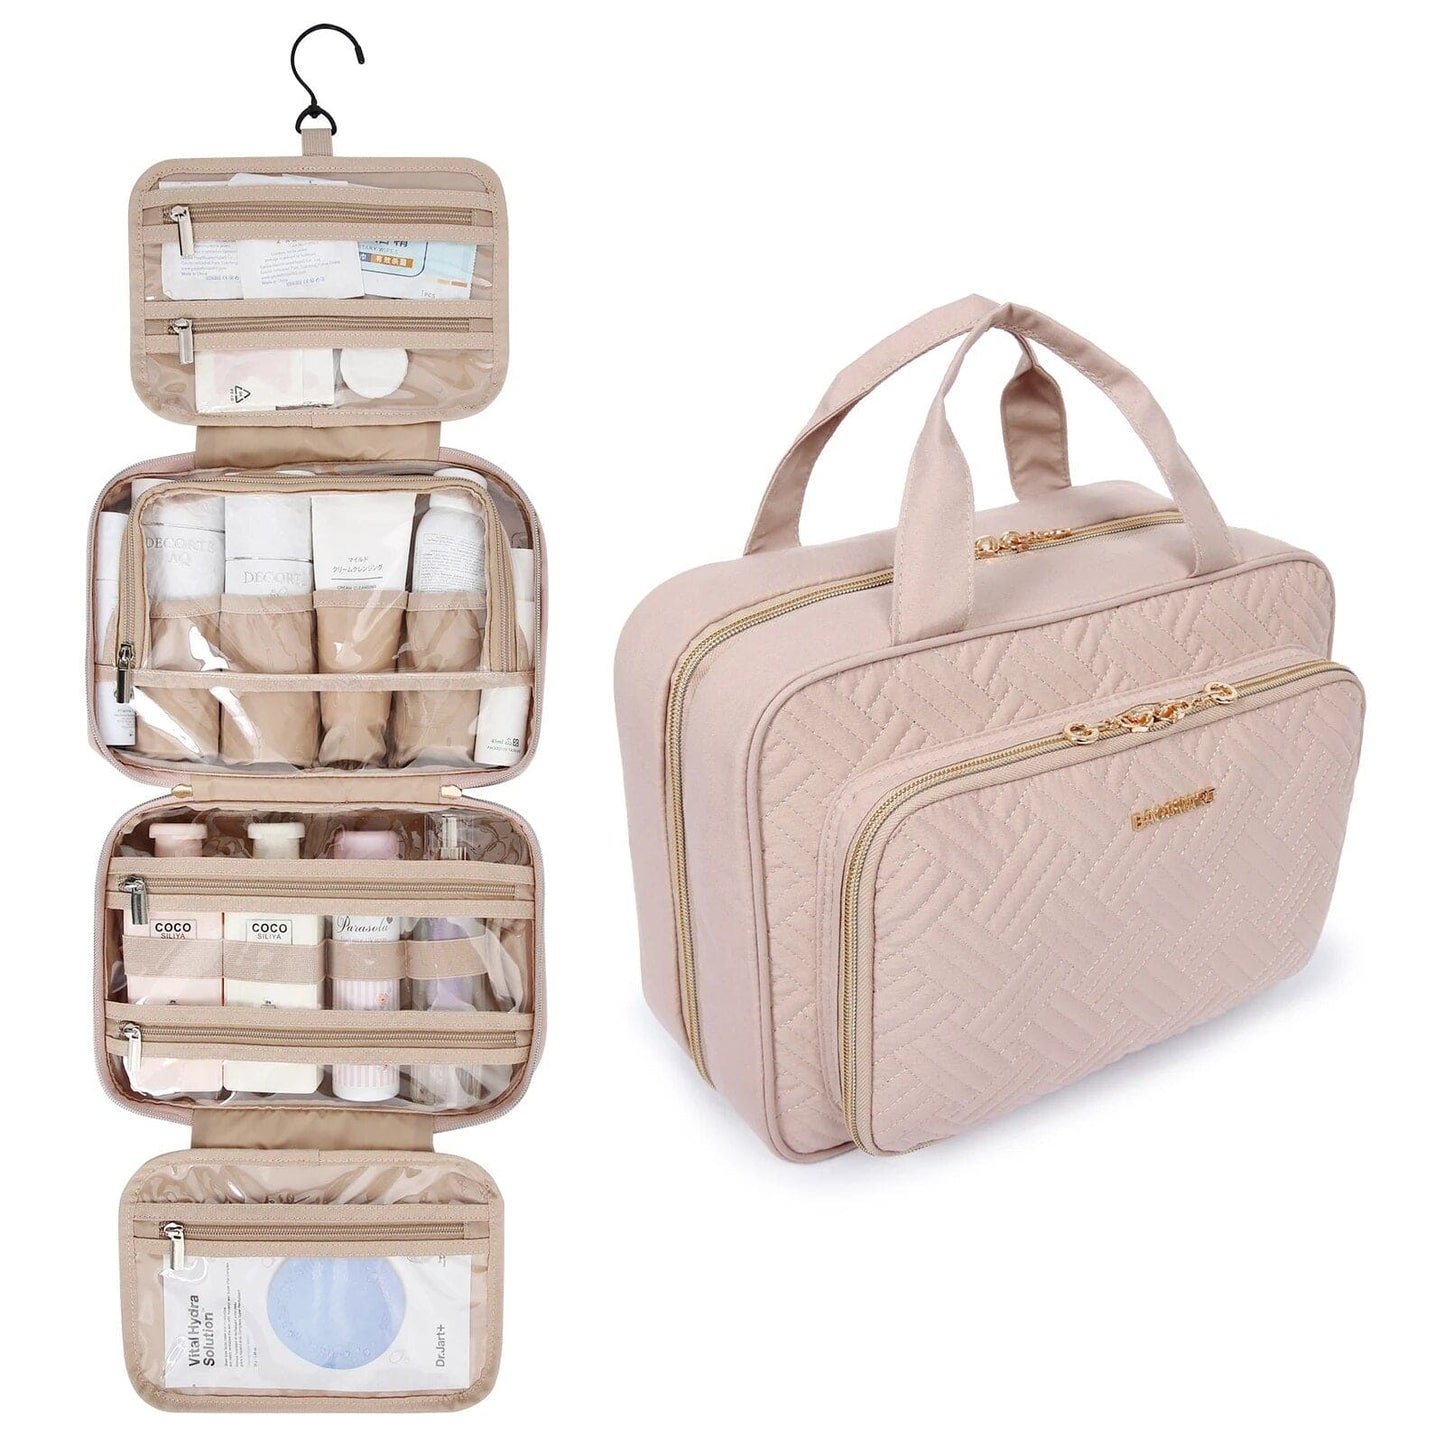 BAGSMART Cosmetic Bag for Women